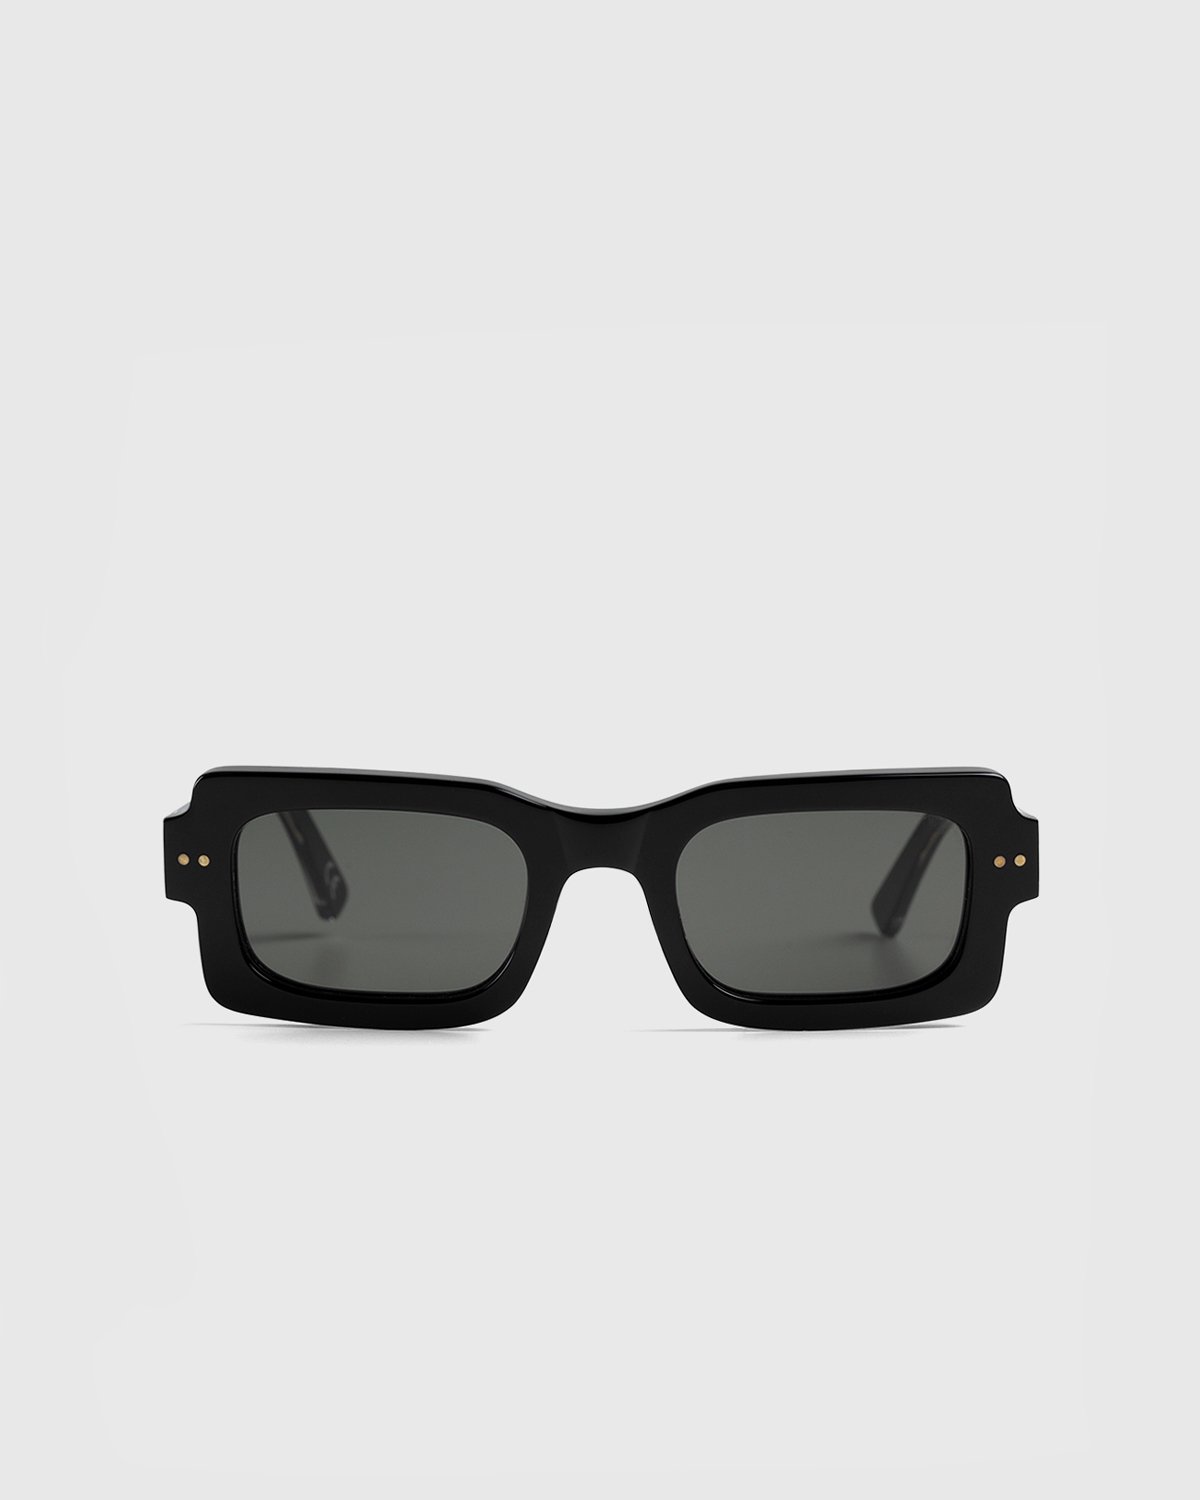 Marni - Lake Vostok Sunglasses Black - Accessories - Black - Image 1